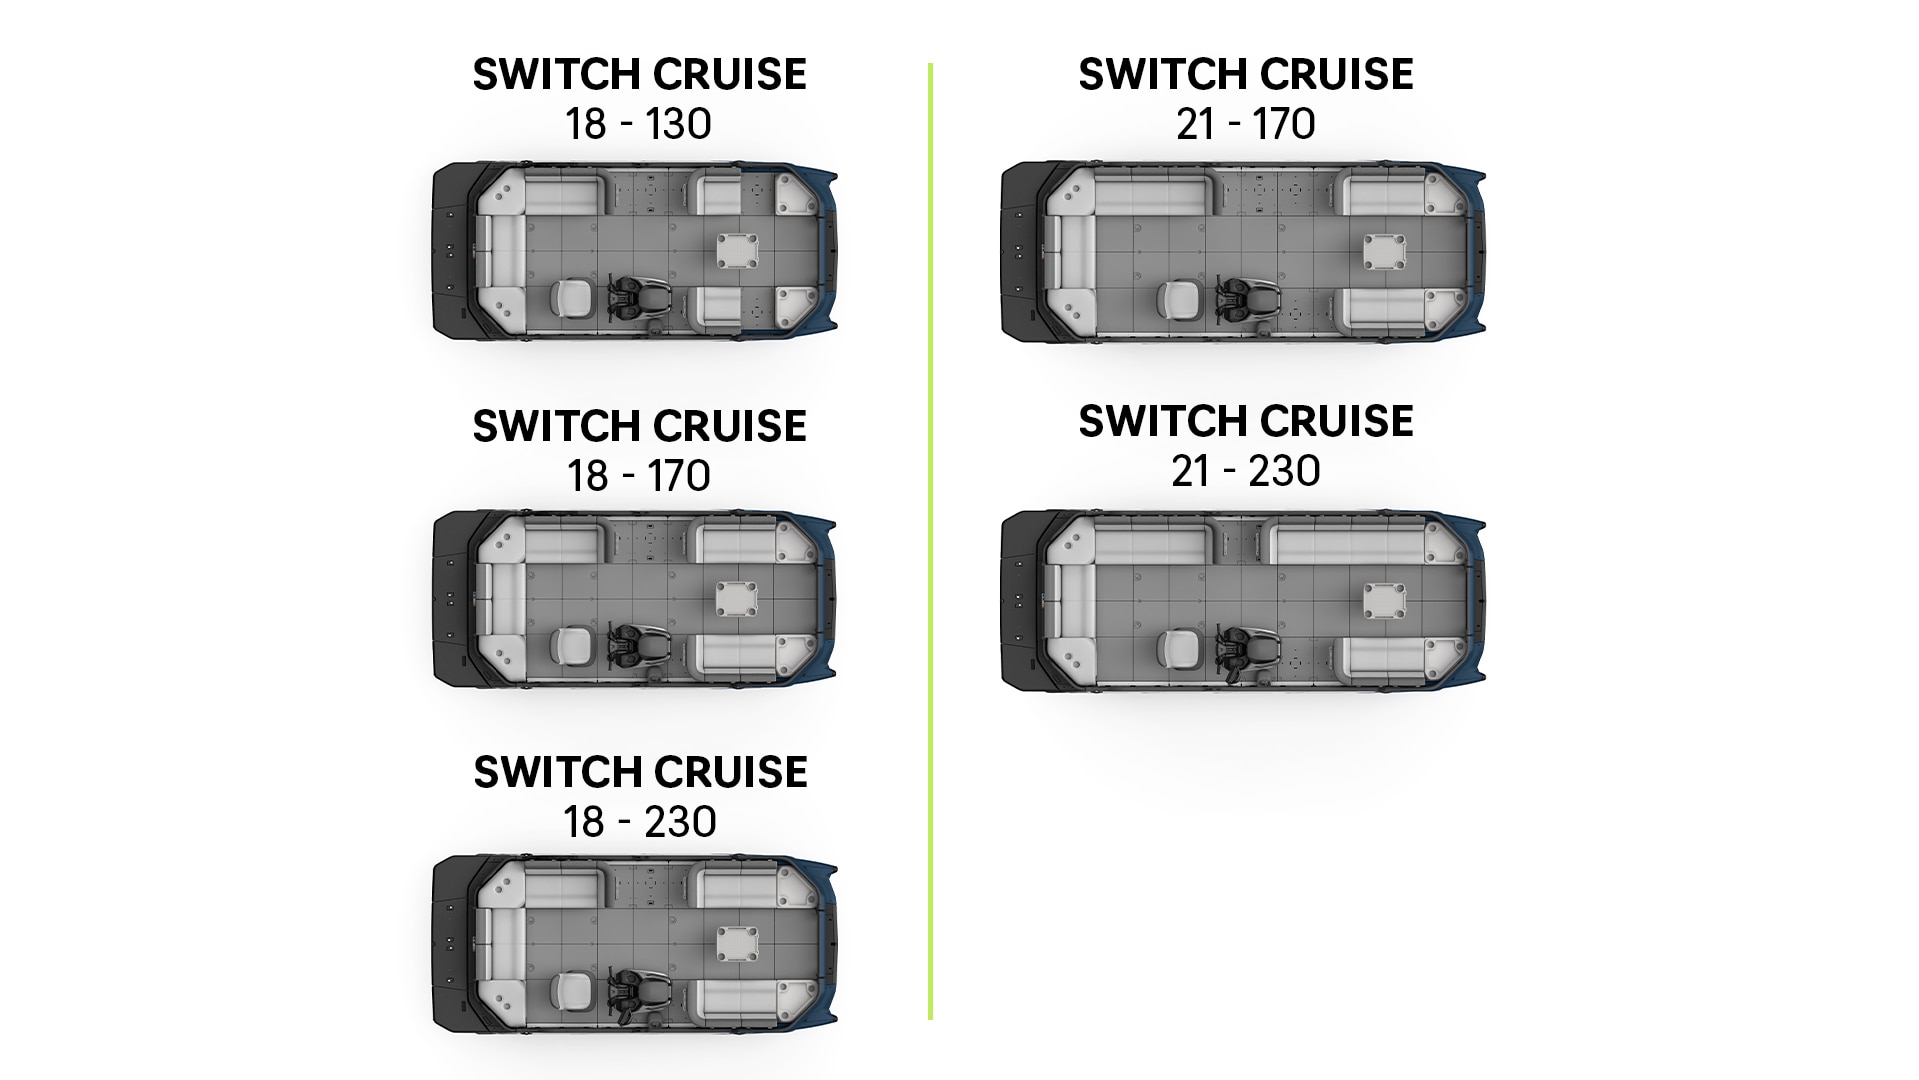 Floorplan of the Sea-Doo Switch Cruise pontoon boats